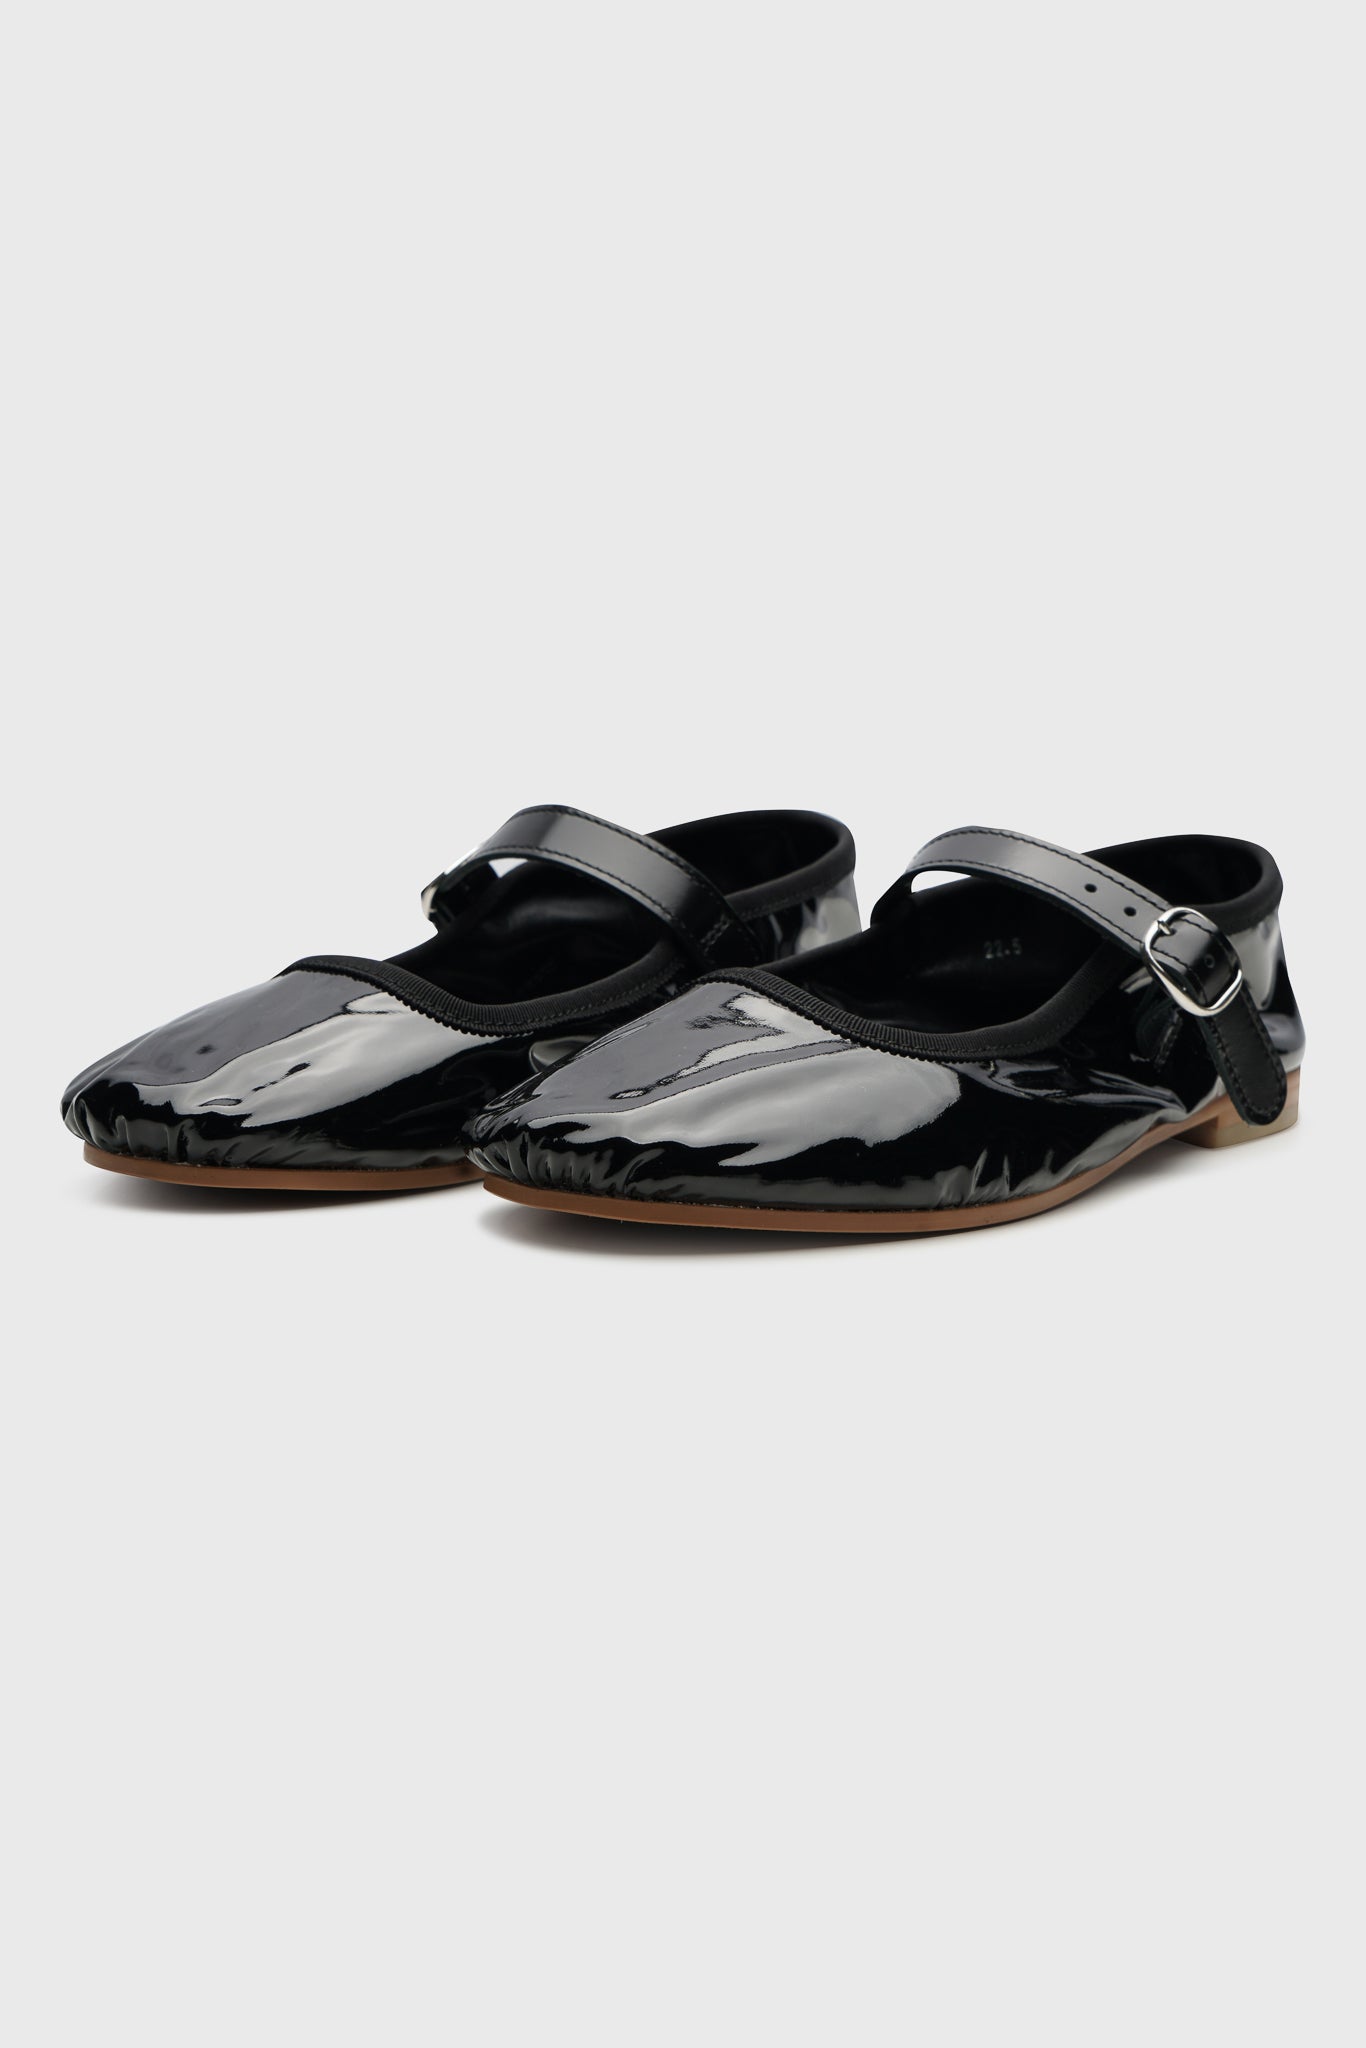 Selectshop FRAME - TAO Synthetic Leather Enamel Strap Shoes Footwear Dubai